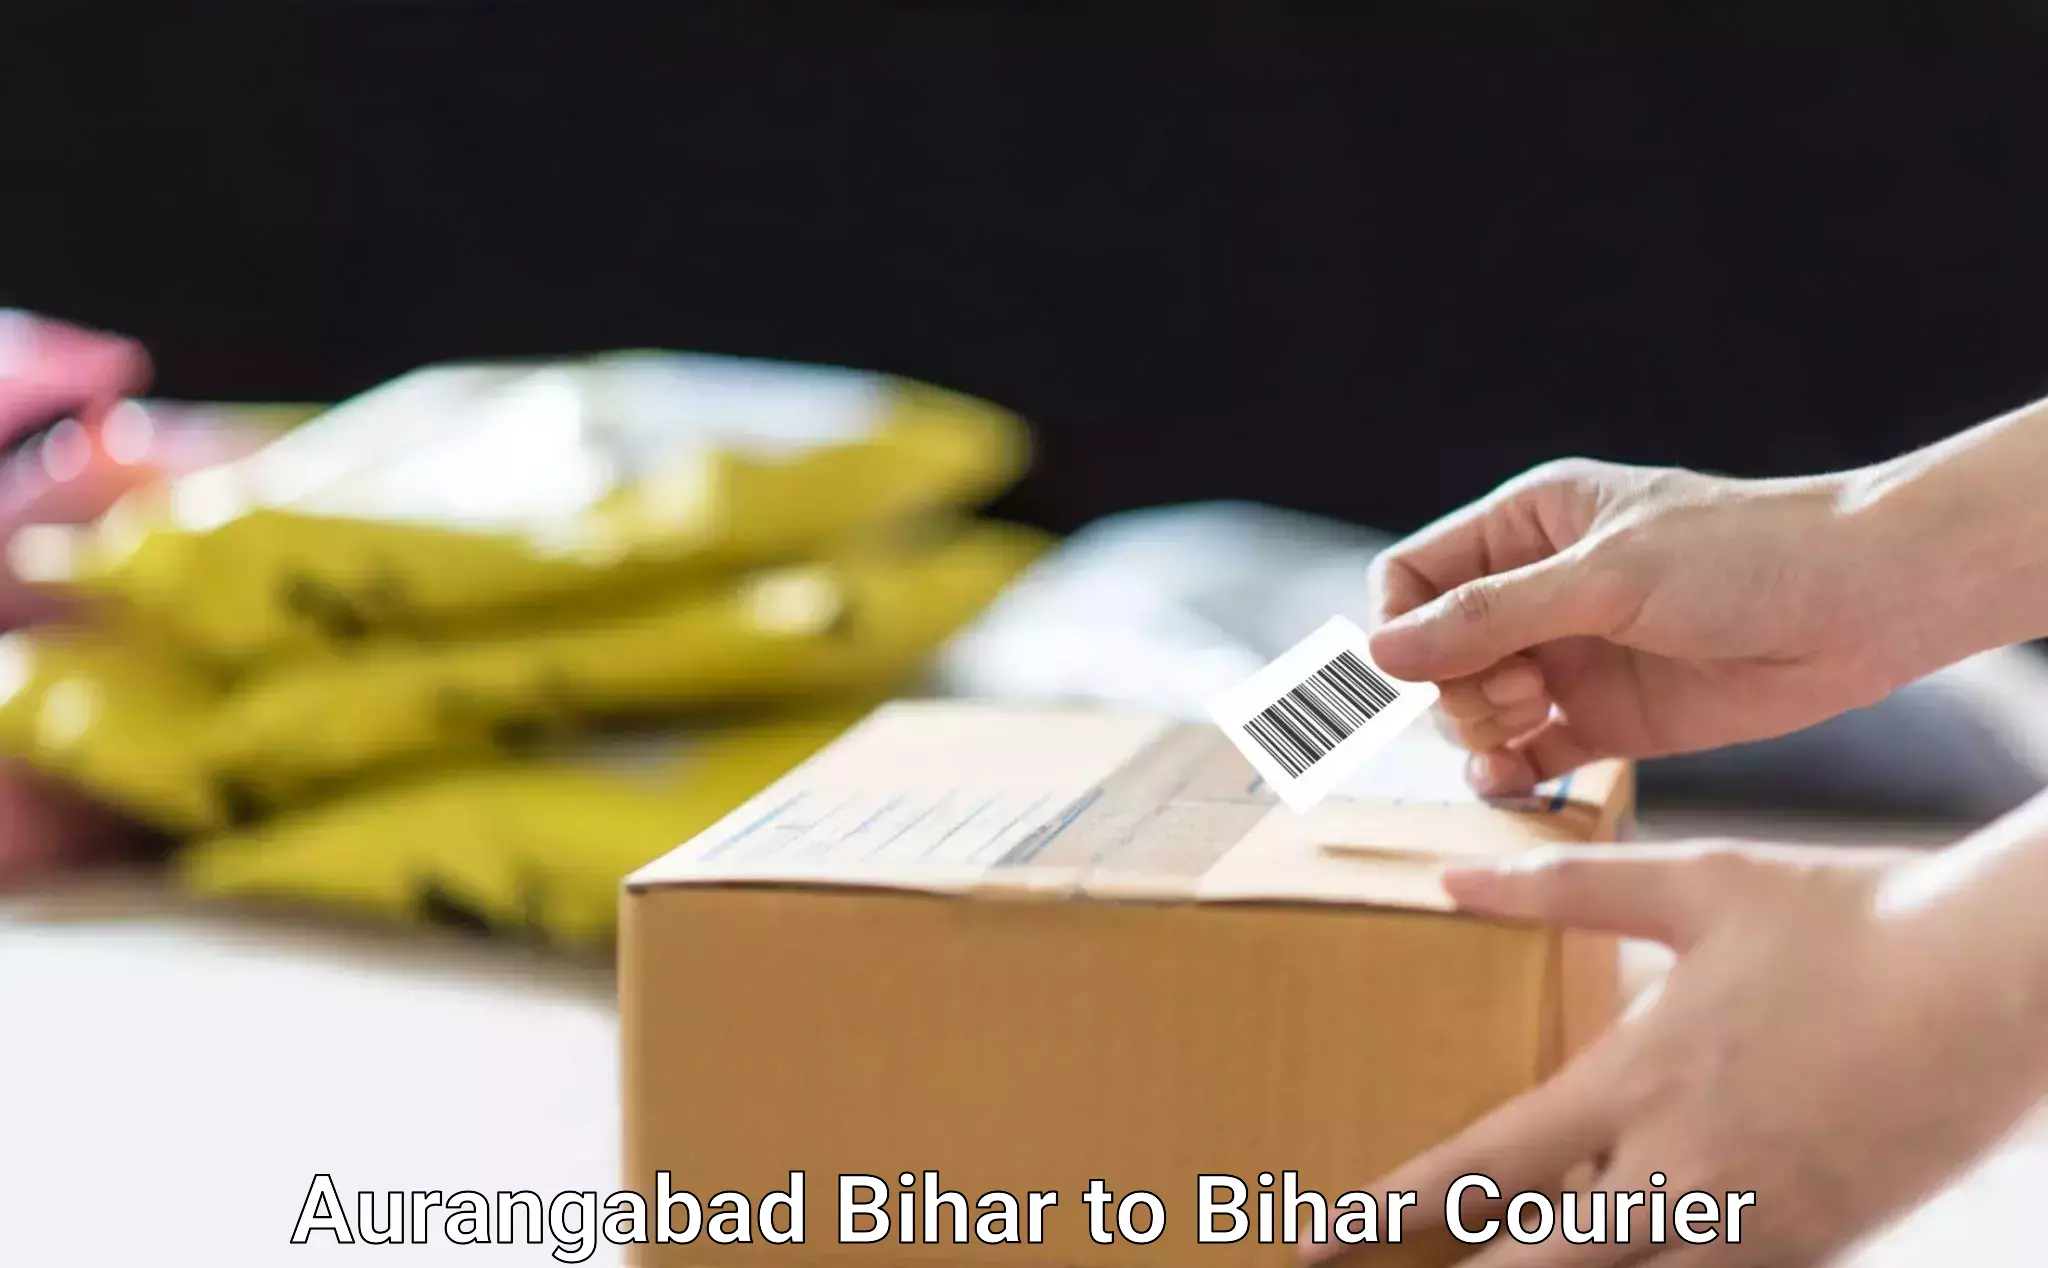 Furniture relocation experts Aurangabad Bihar to Rohtas